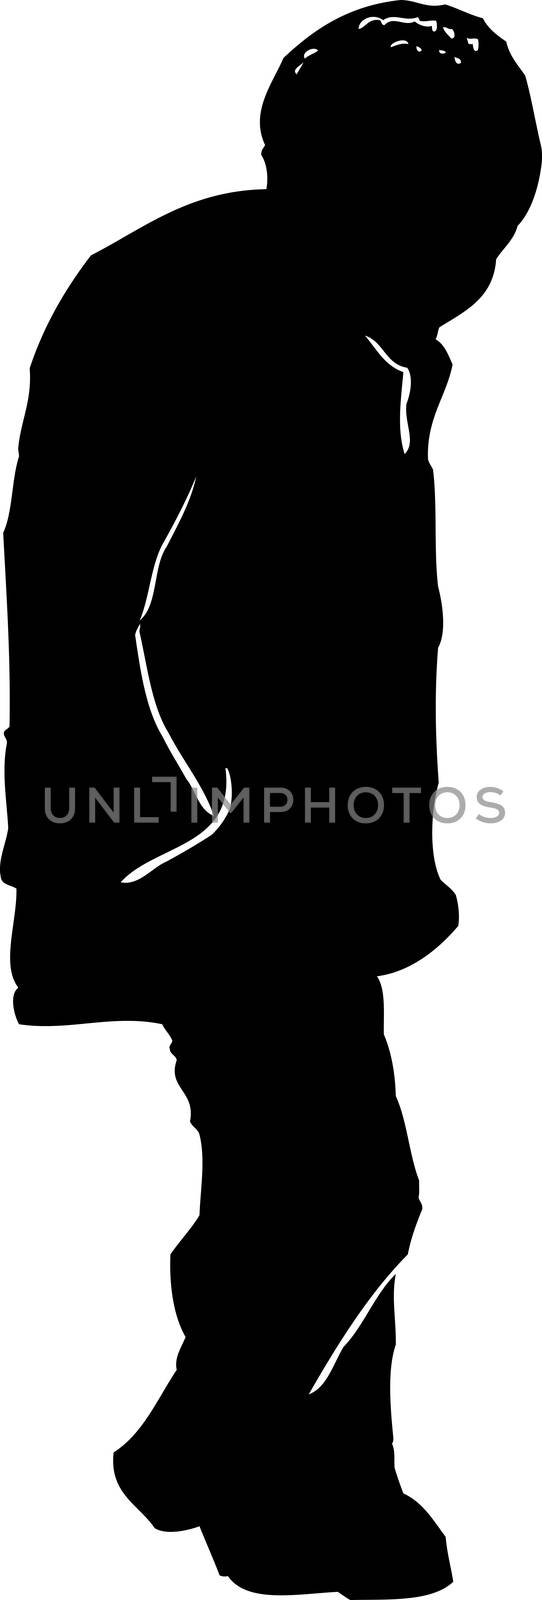 Single older Black man walking over isolated background